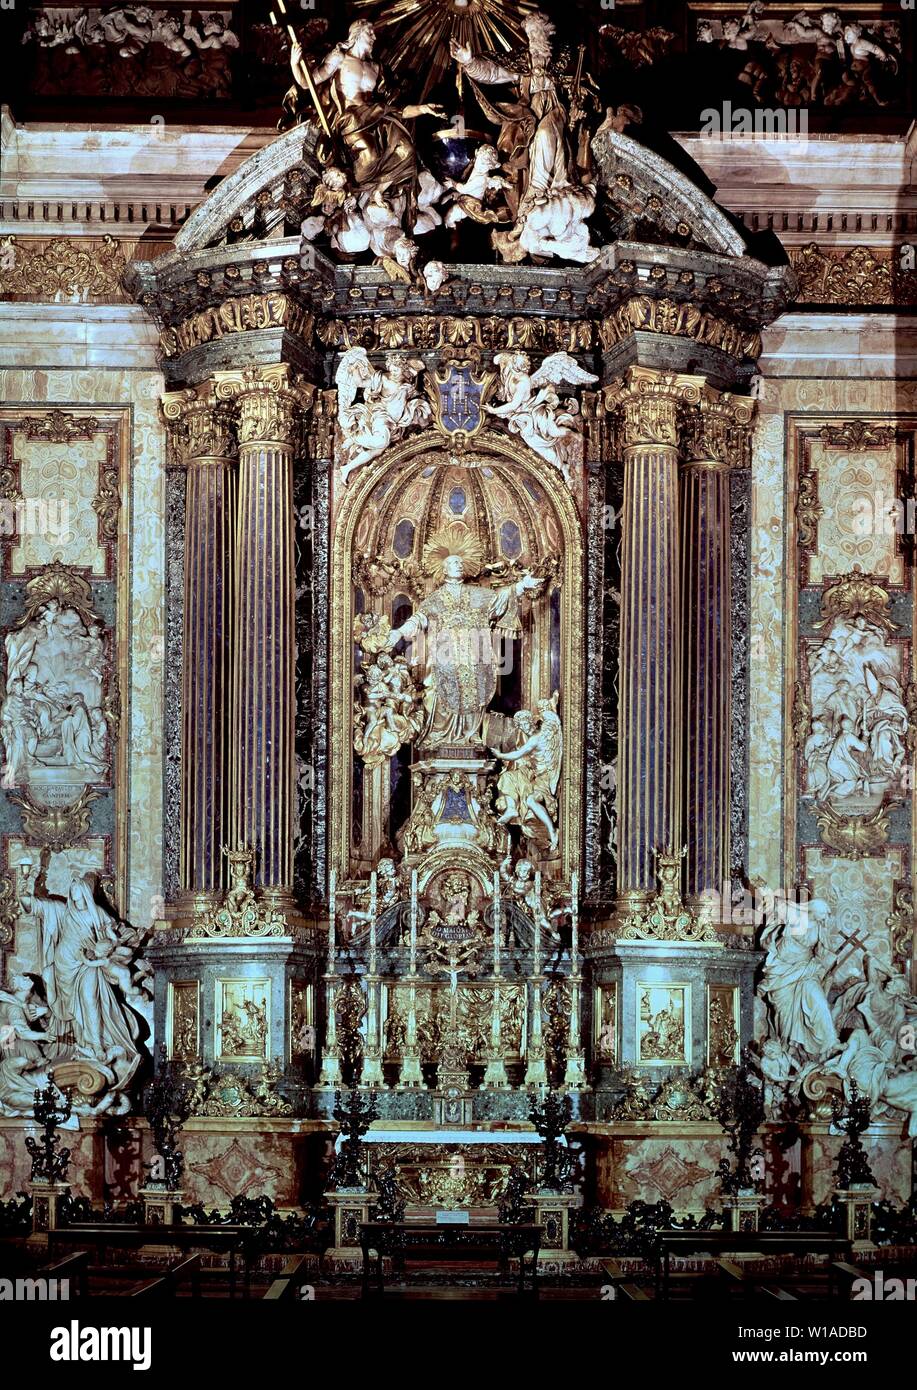 Innenraum - Altar "TRIUNFO DE SAN IGNACIO" 1696/1700 - EL MAS RICO DE ROMA. Autor: Andrea Pozzo. Lage: Iglesia del Gesu. Rom. ITALIA. Stockfoto